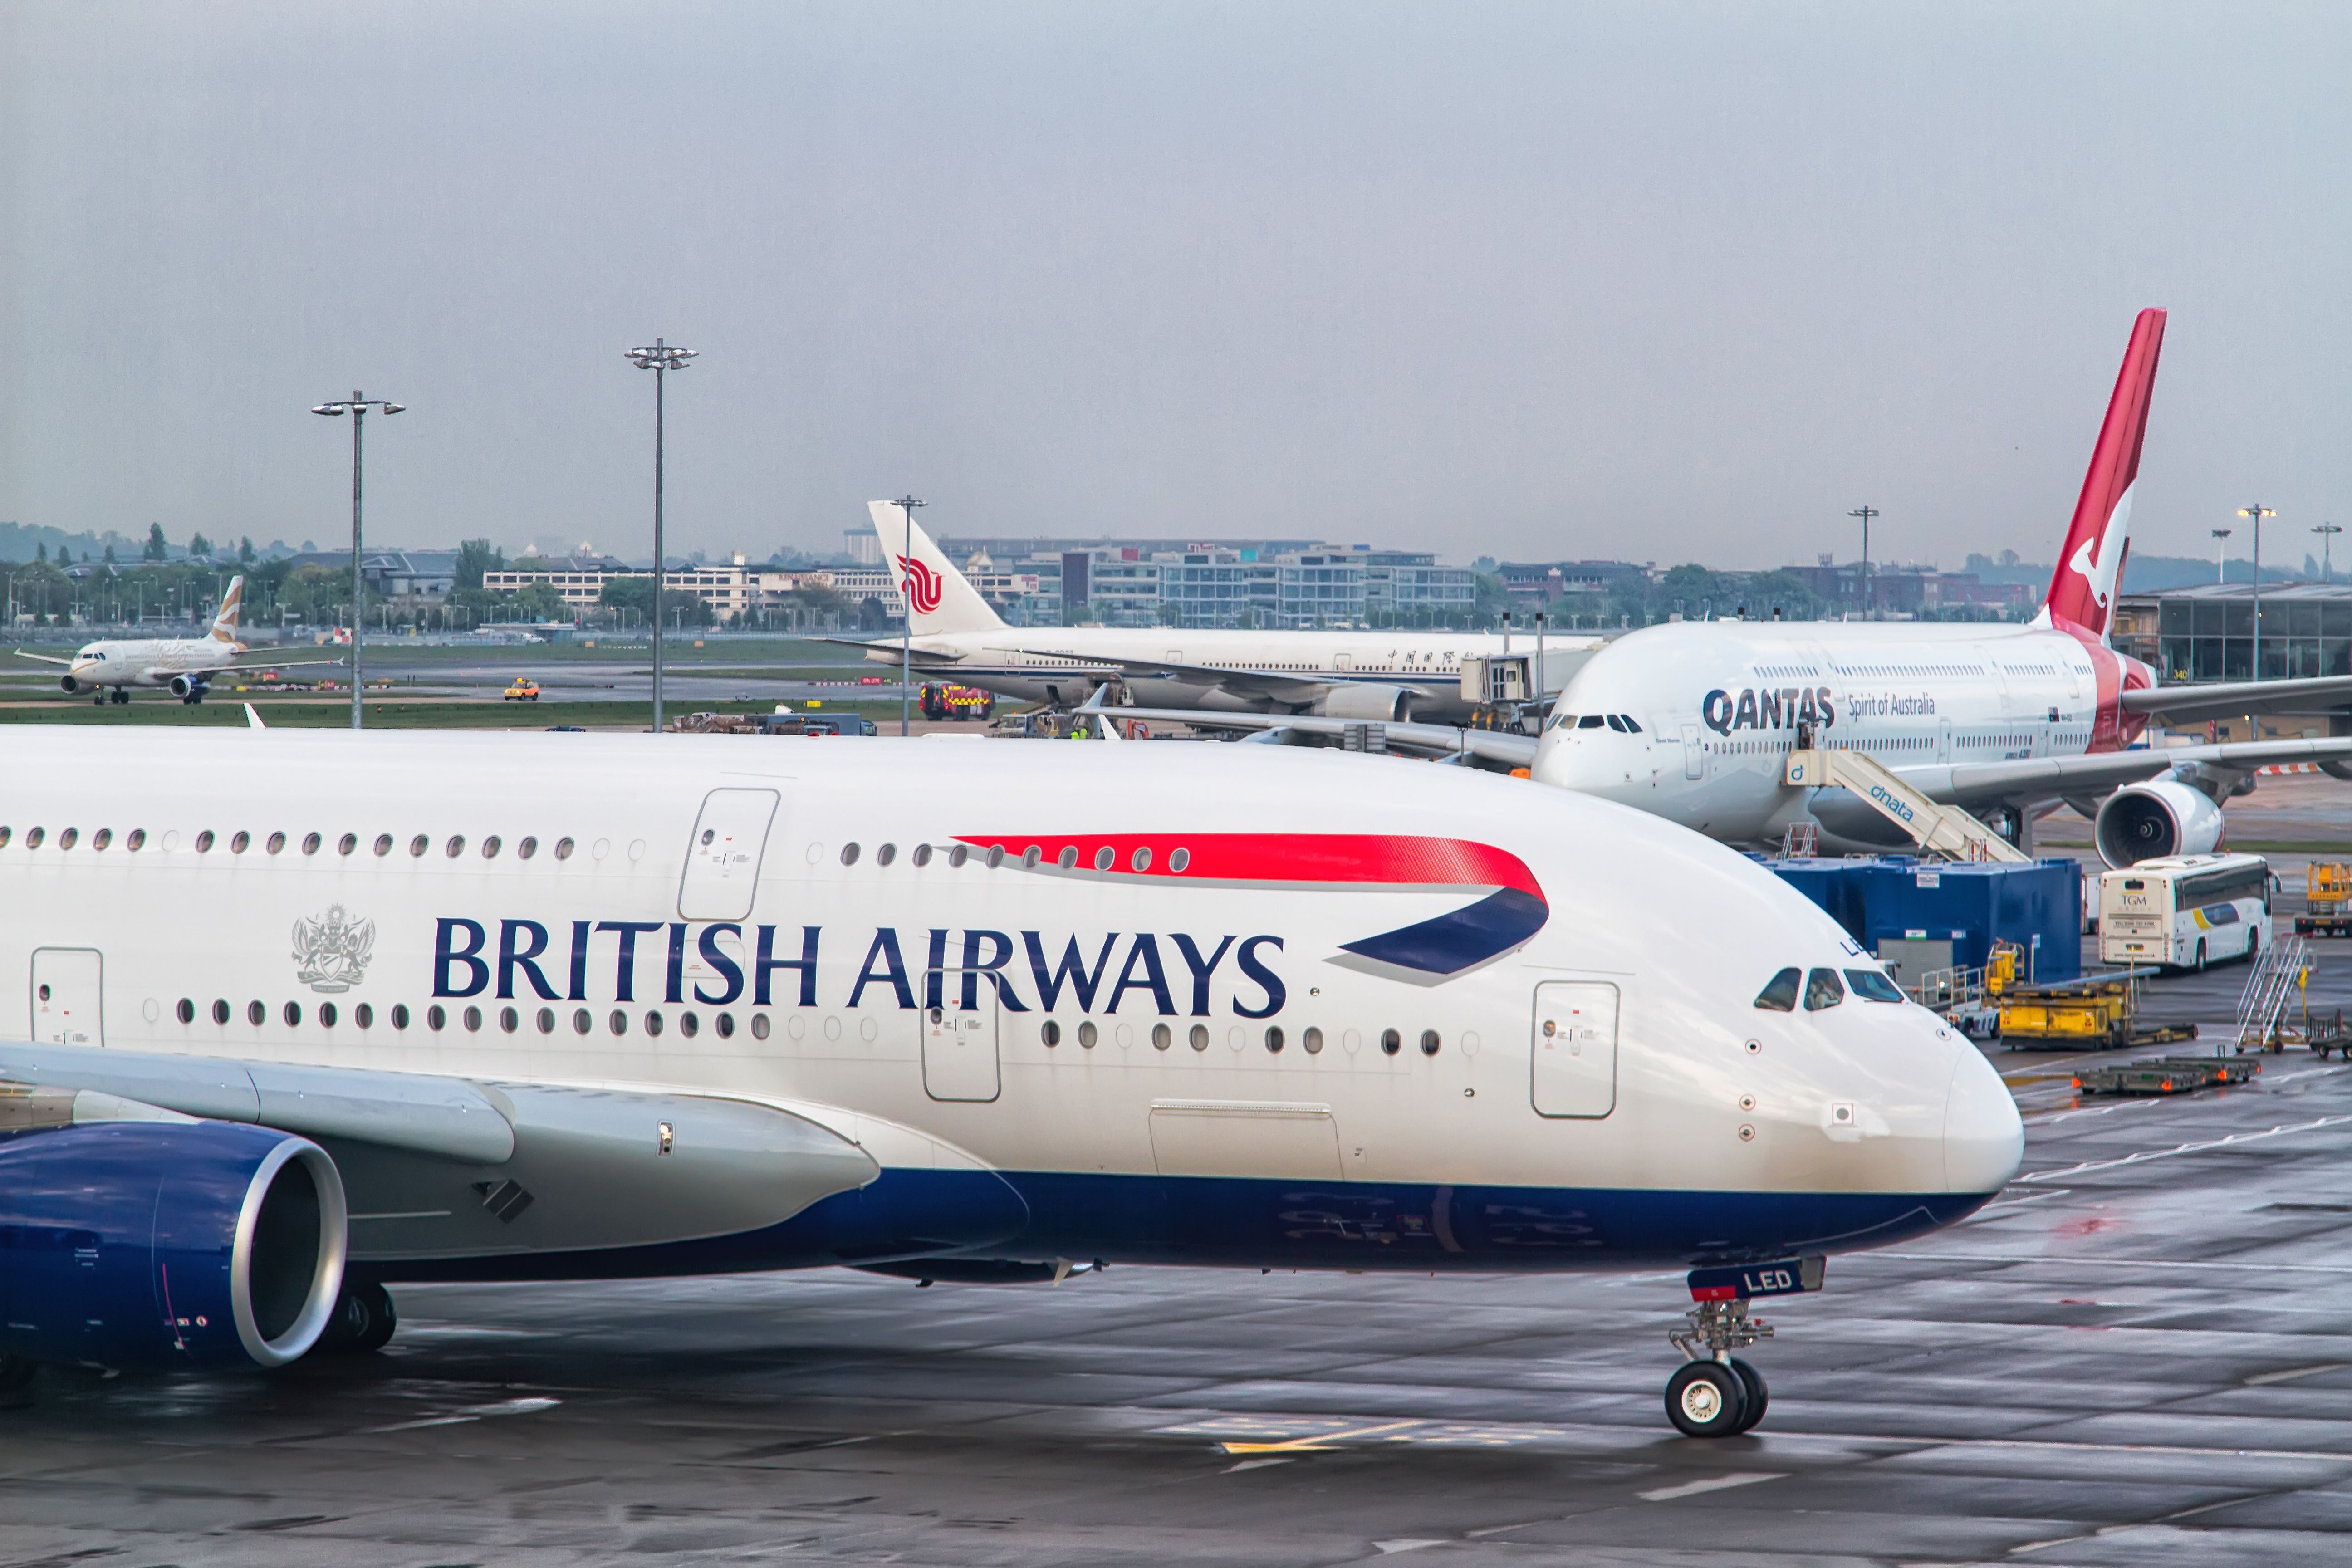 British Airways & Qantas Airbus A380s at London Heathrow Airport